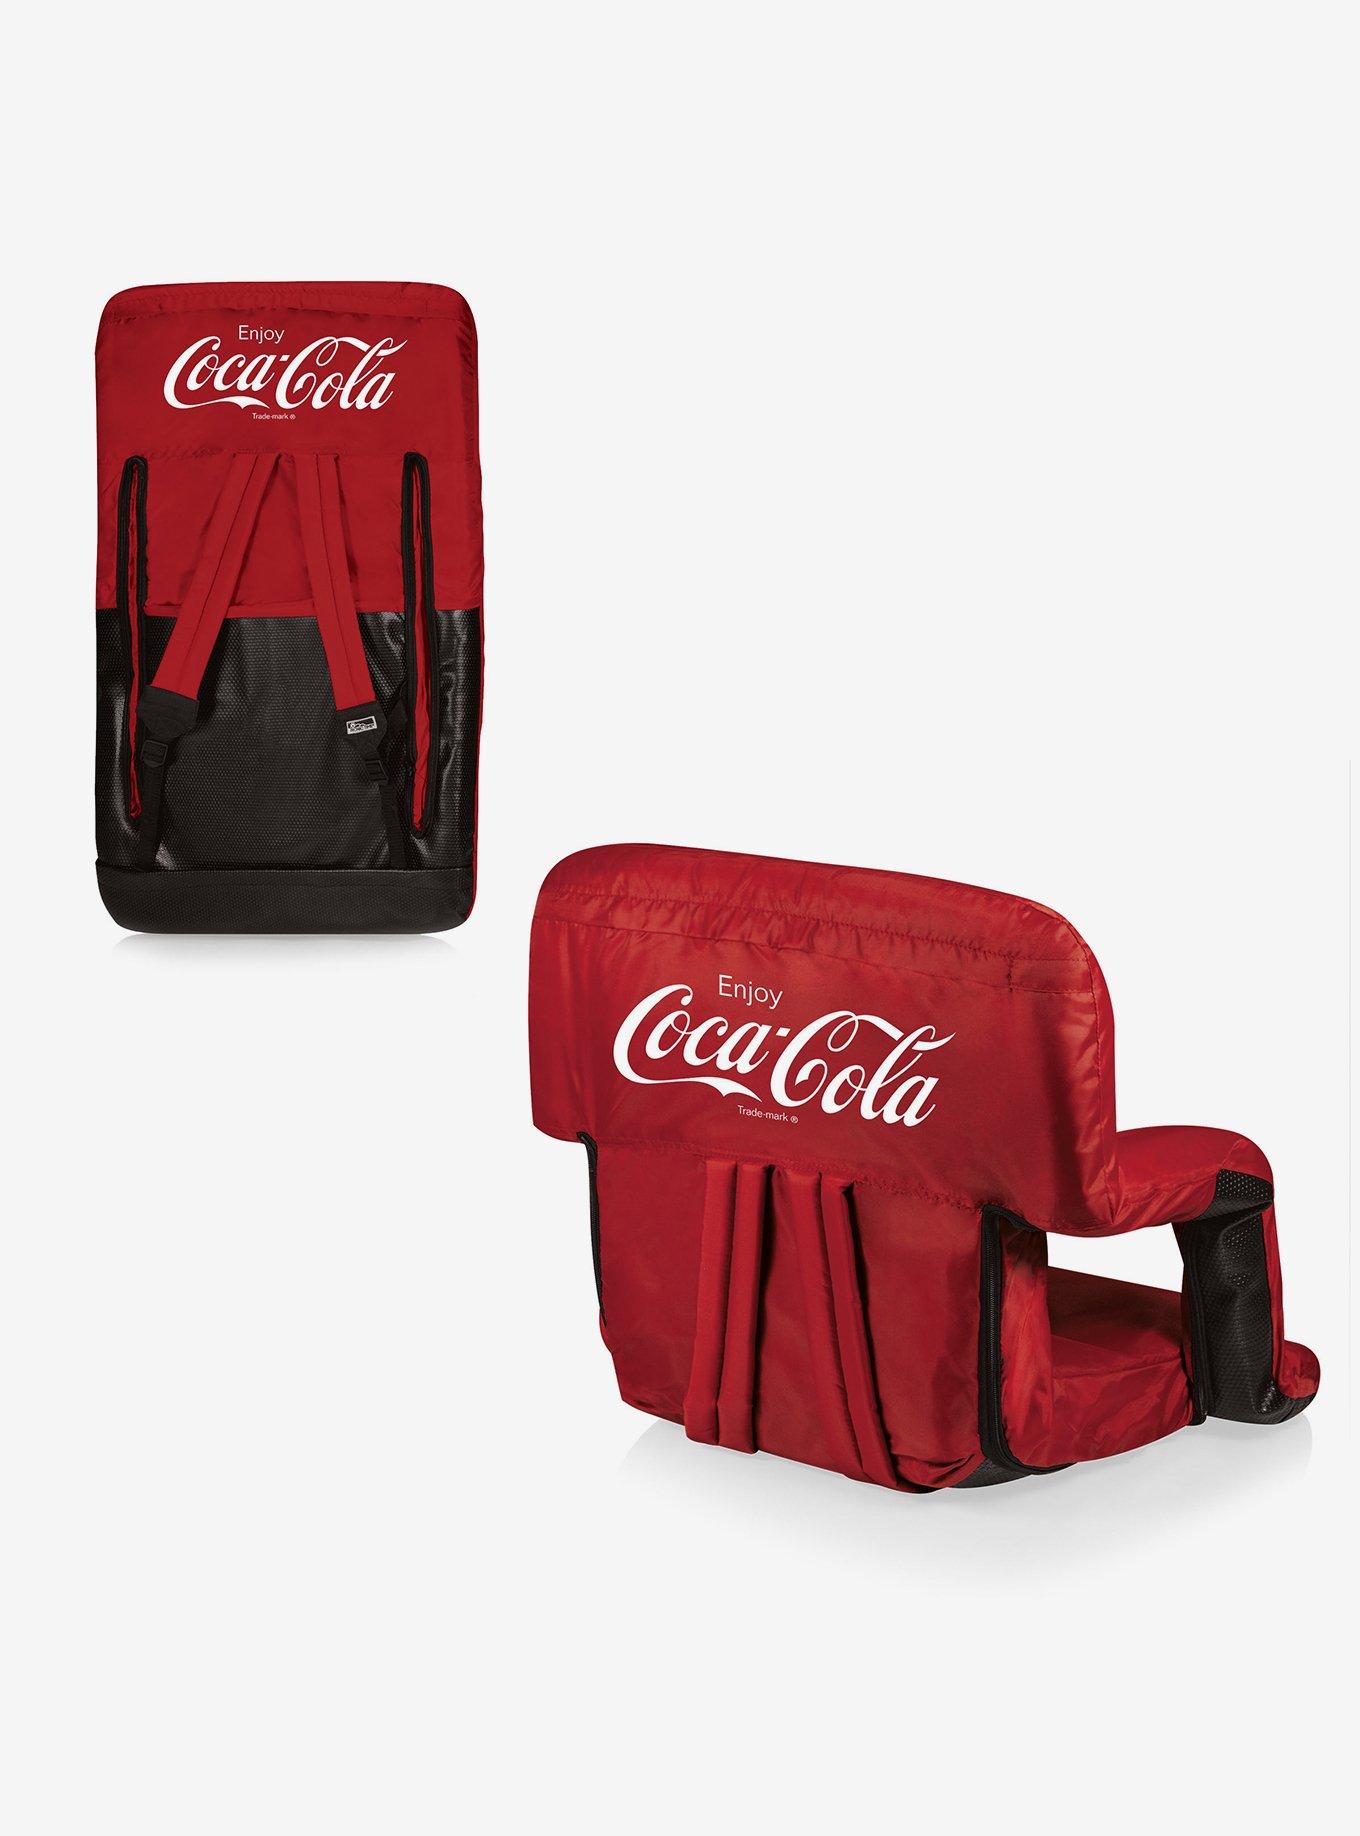 Coke Coca-Cola Enjoy Coca-Cola Ventura Seat, , alternate